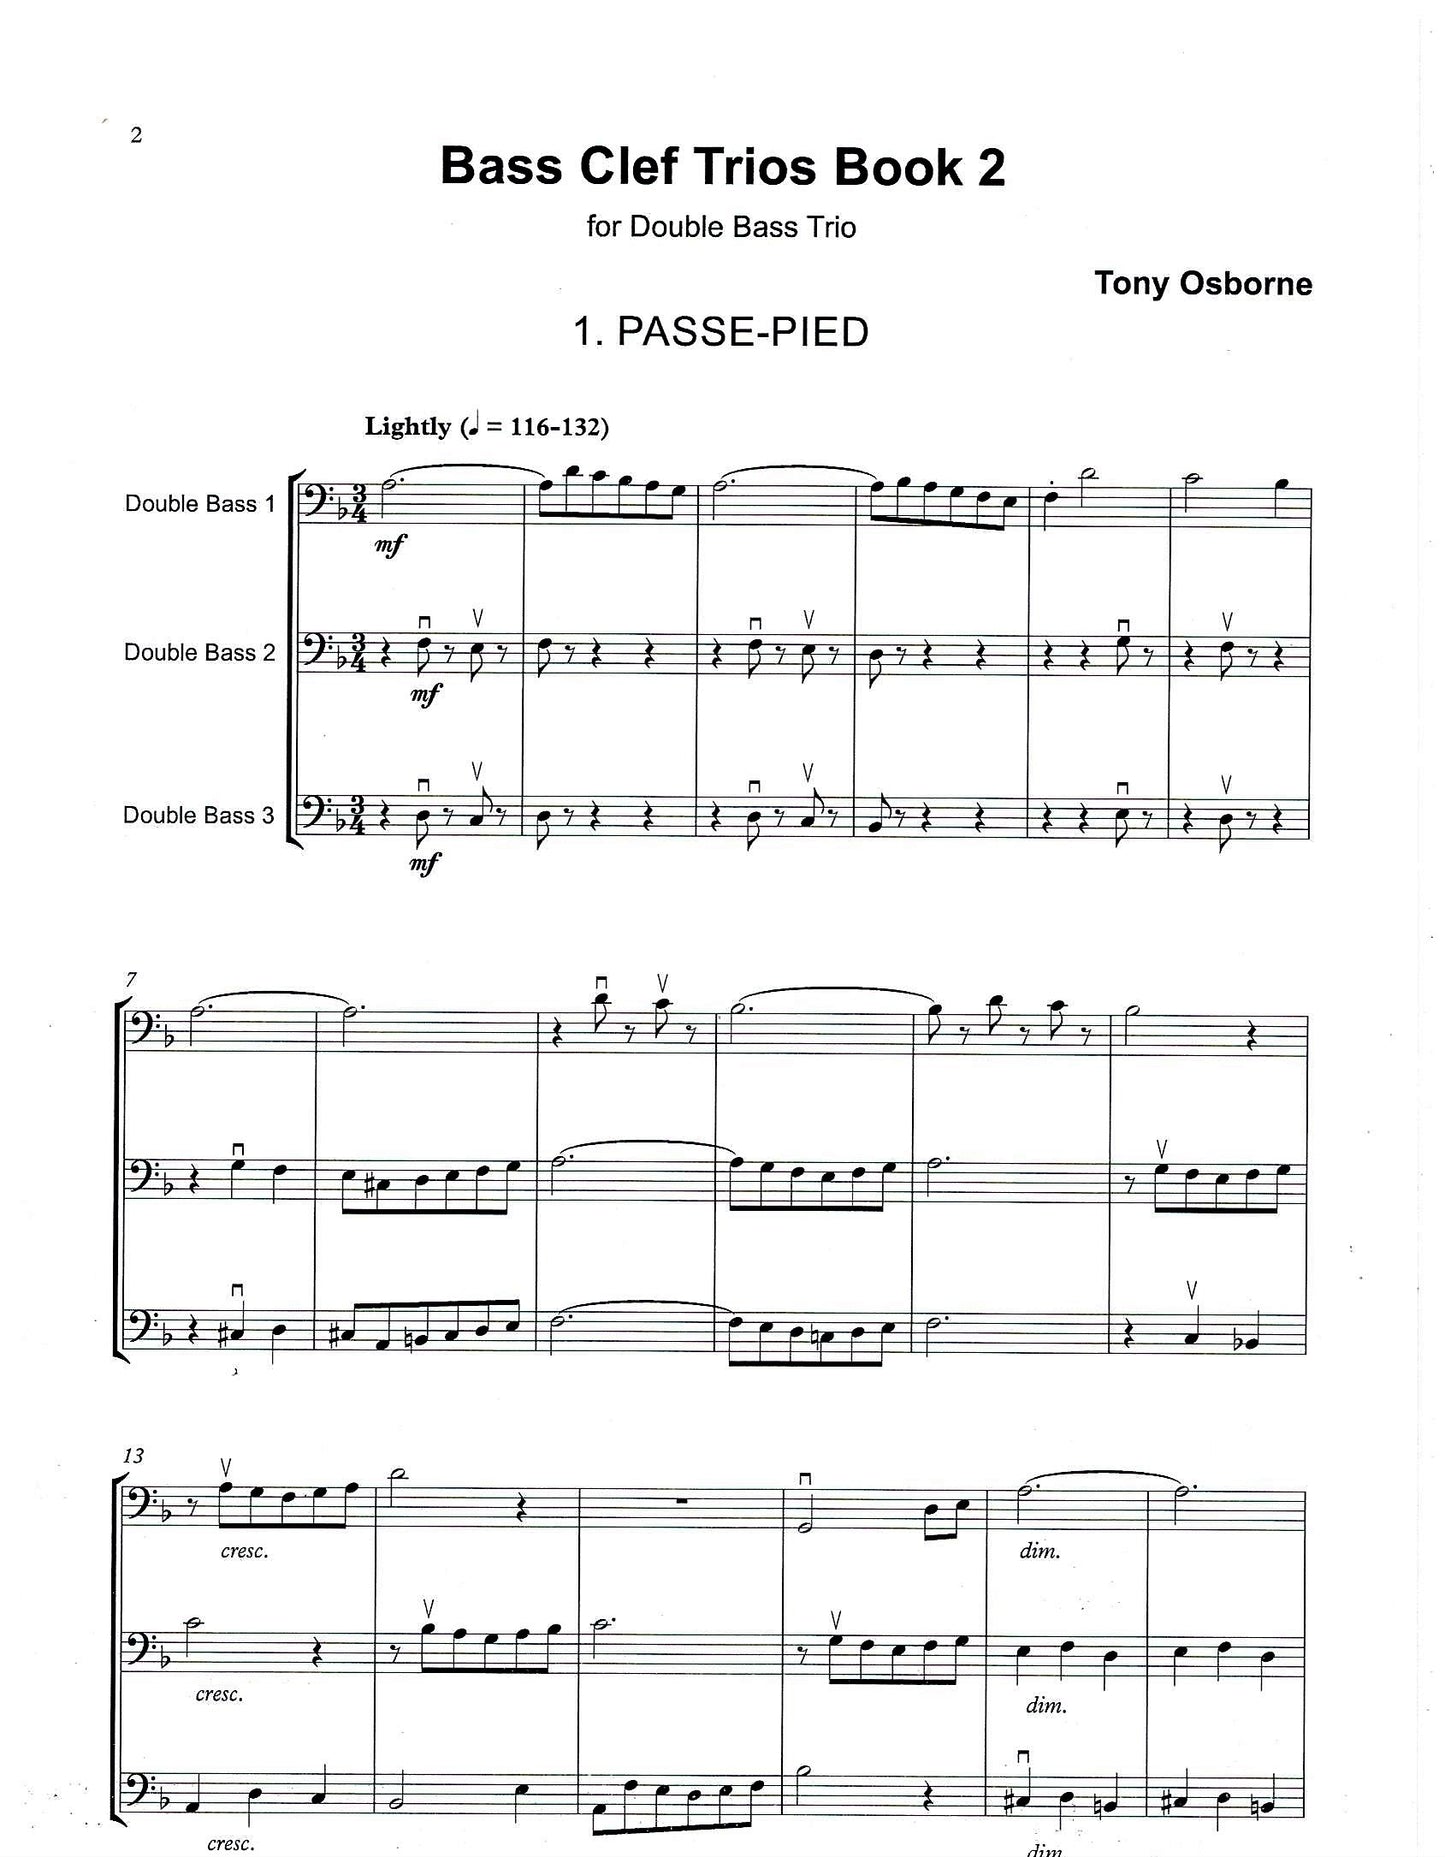 Tony Osborne: Bass Clef Trios Book 2 for double bass trio